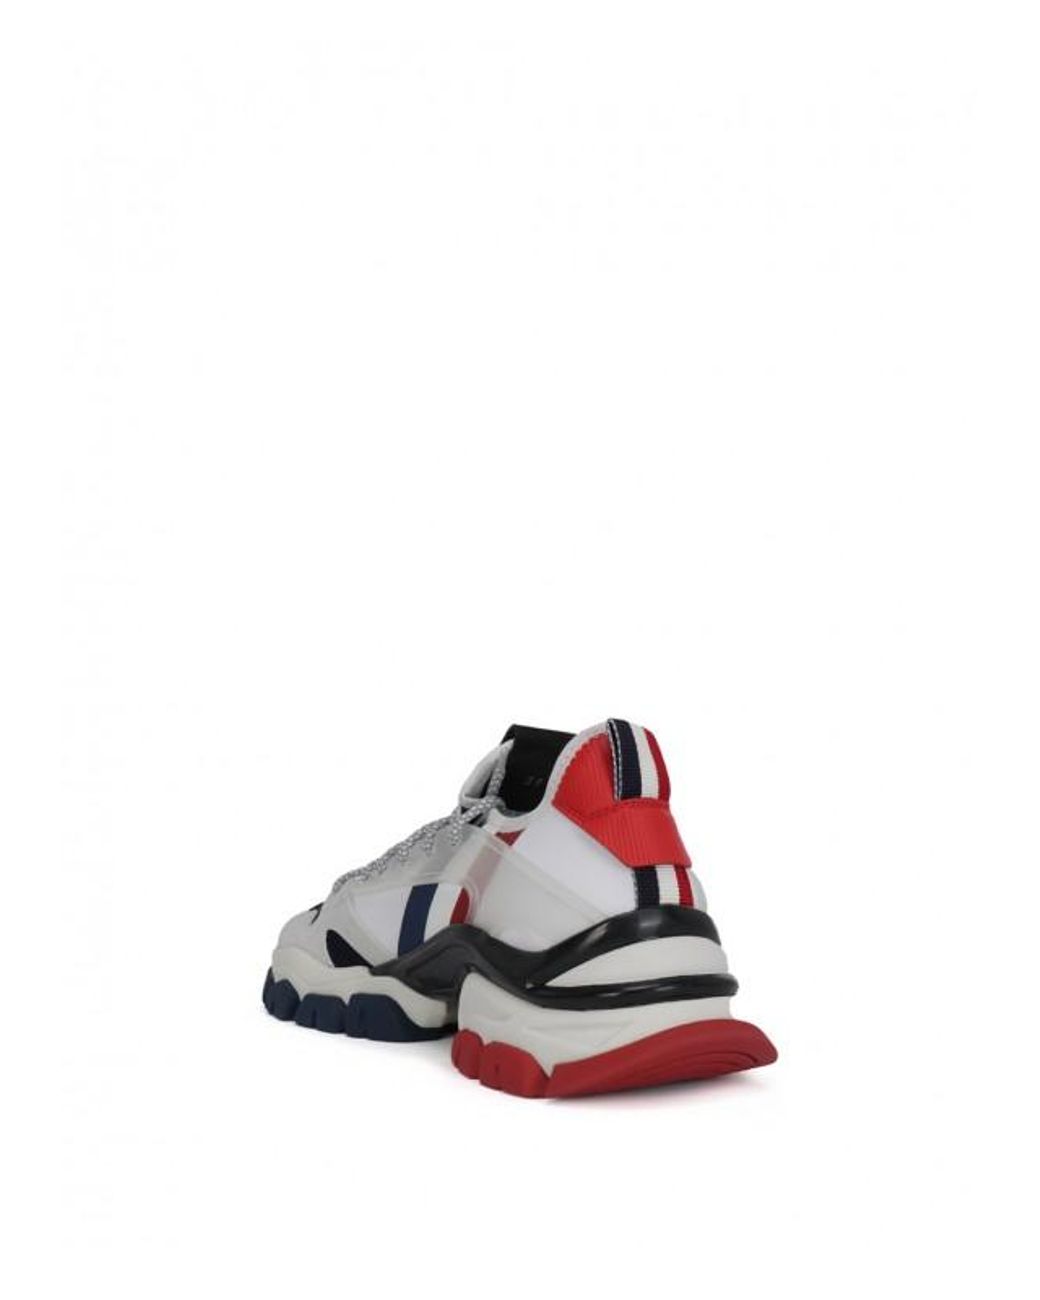 Moncler Lace Trevor Sneakers for Men | Lyst